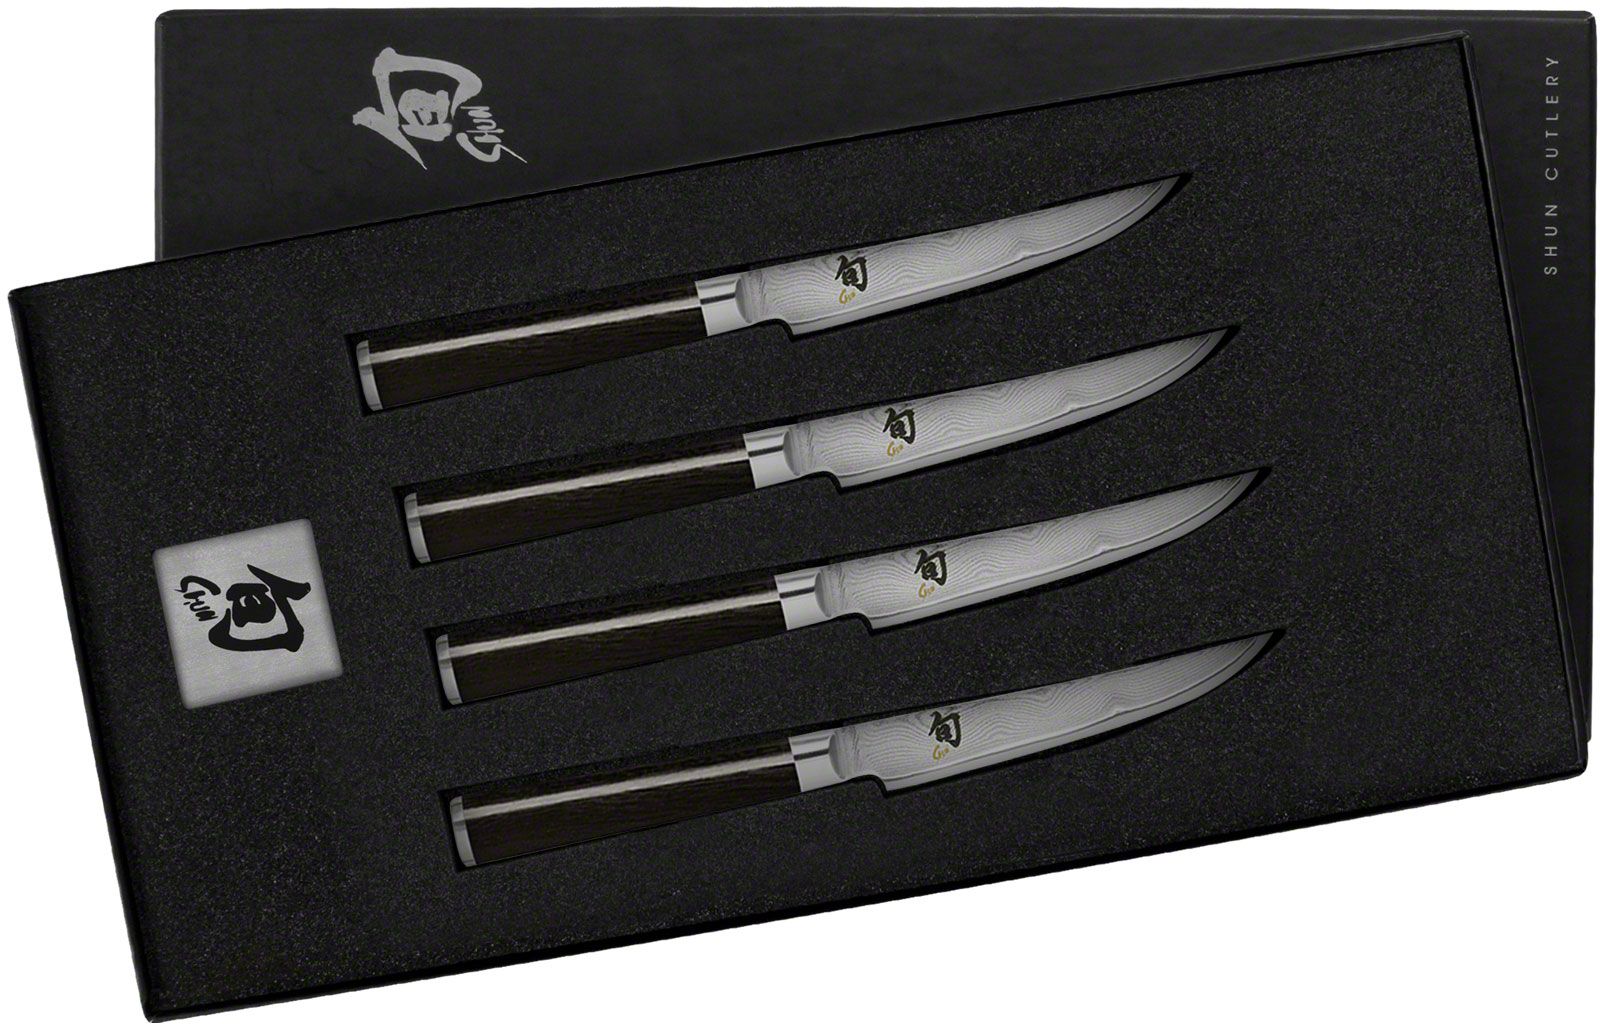 4-Pc. Steak Knife Set In Gift Box